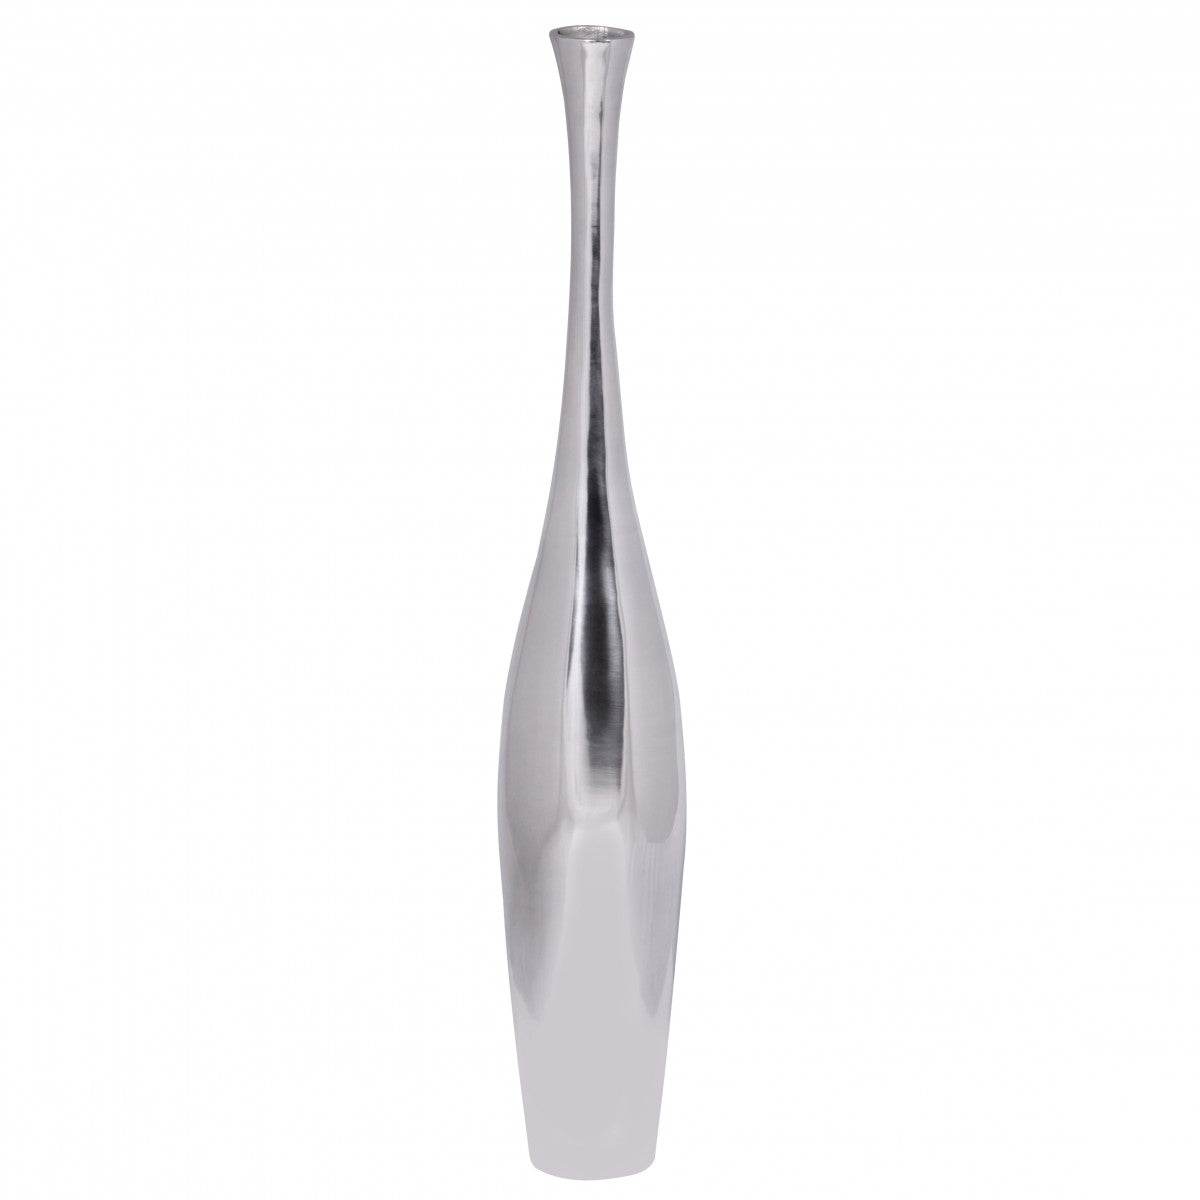 Nancy's Aluminum Flower Vase - Decoration - Modern Vase - Design - Silver